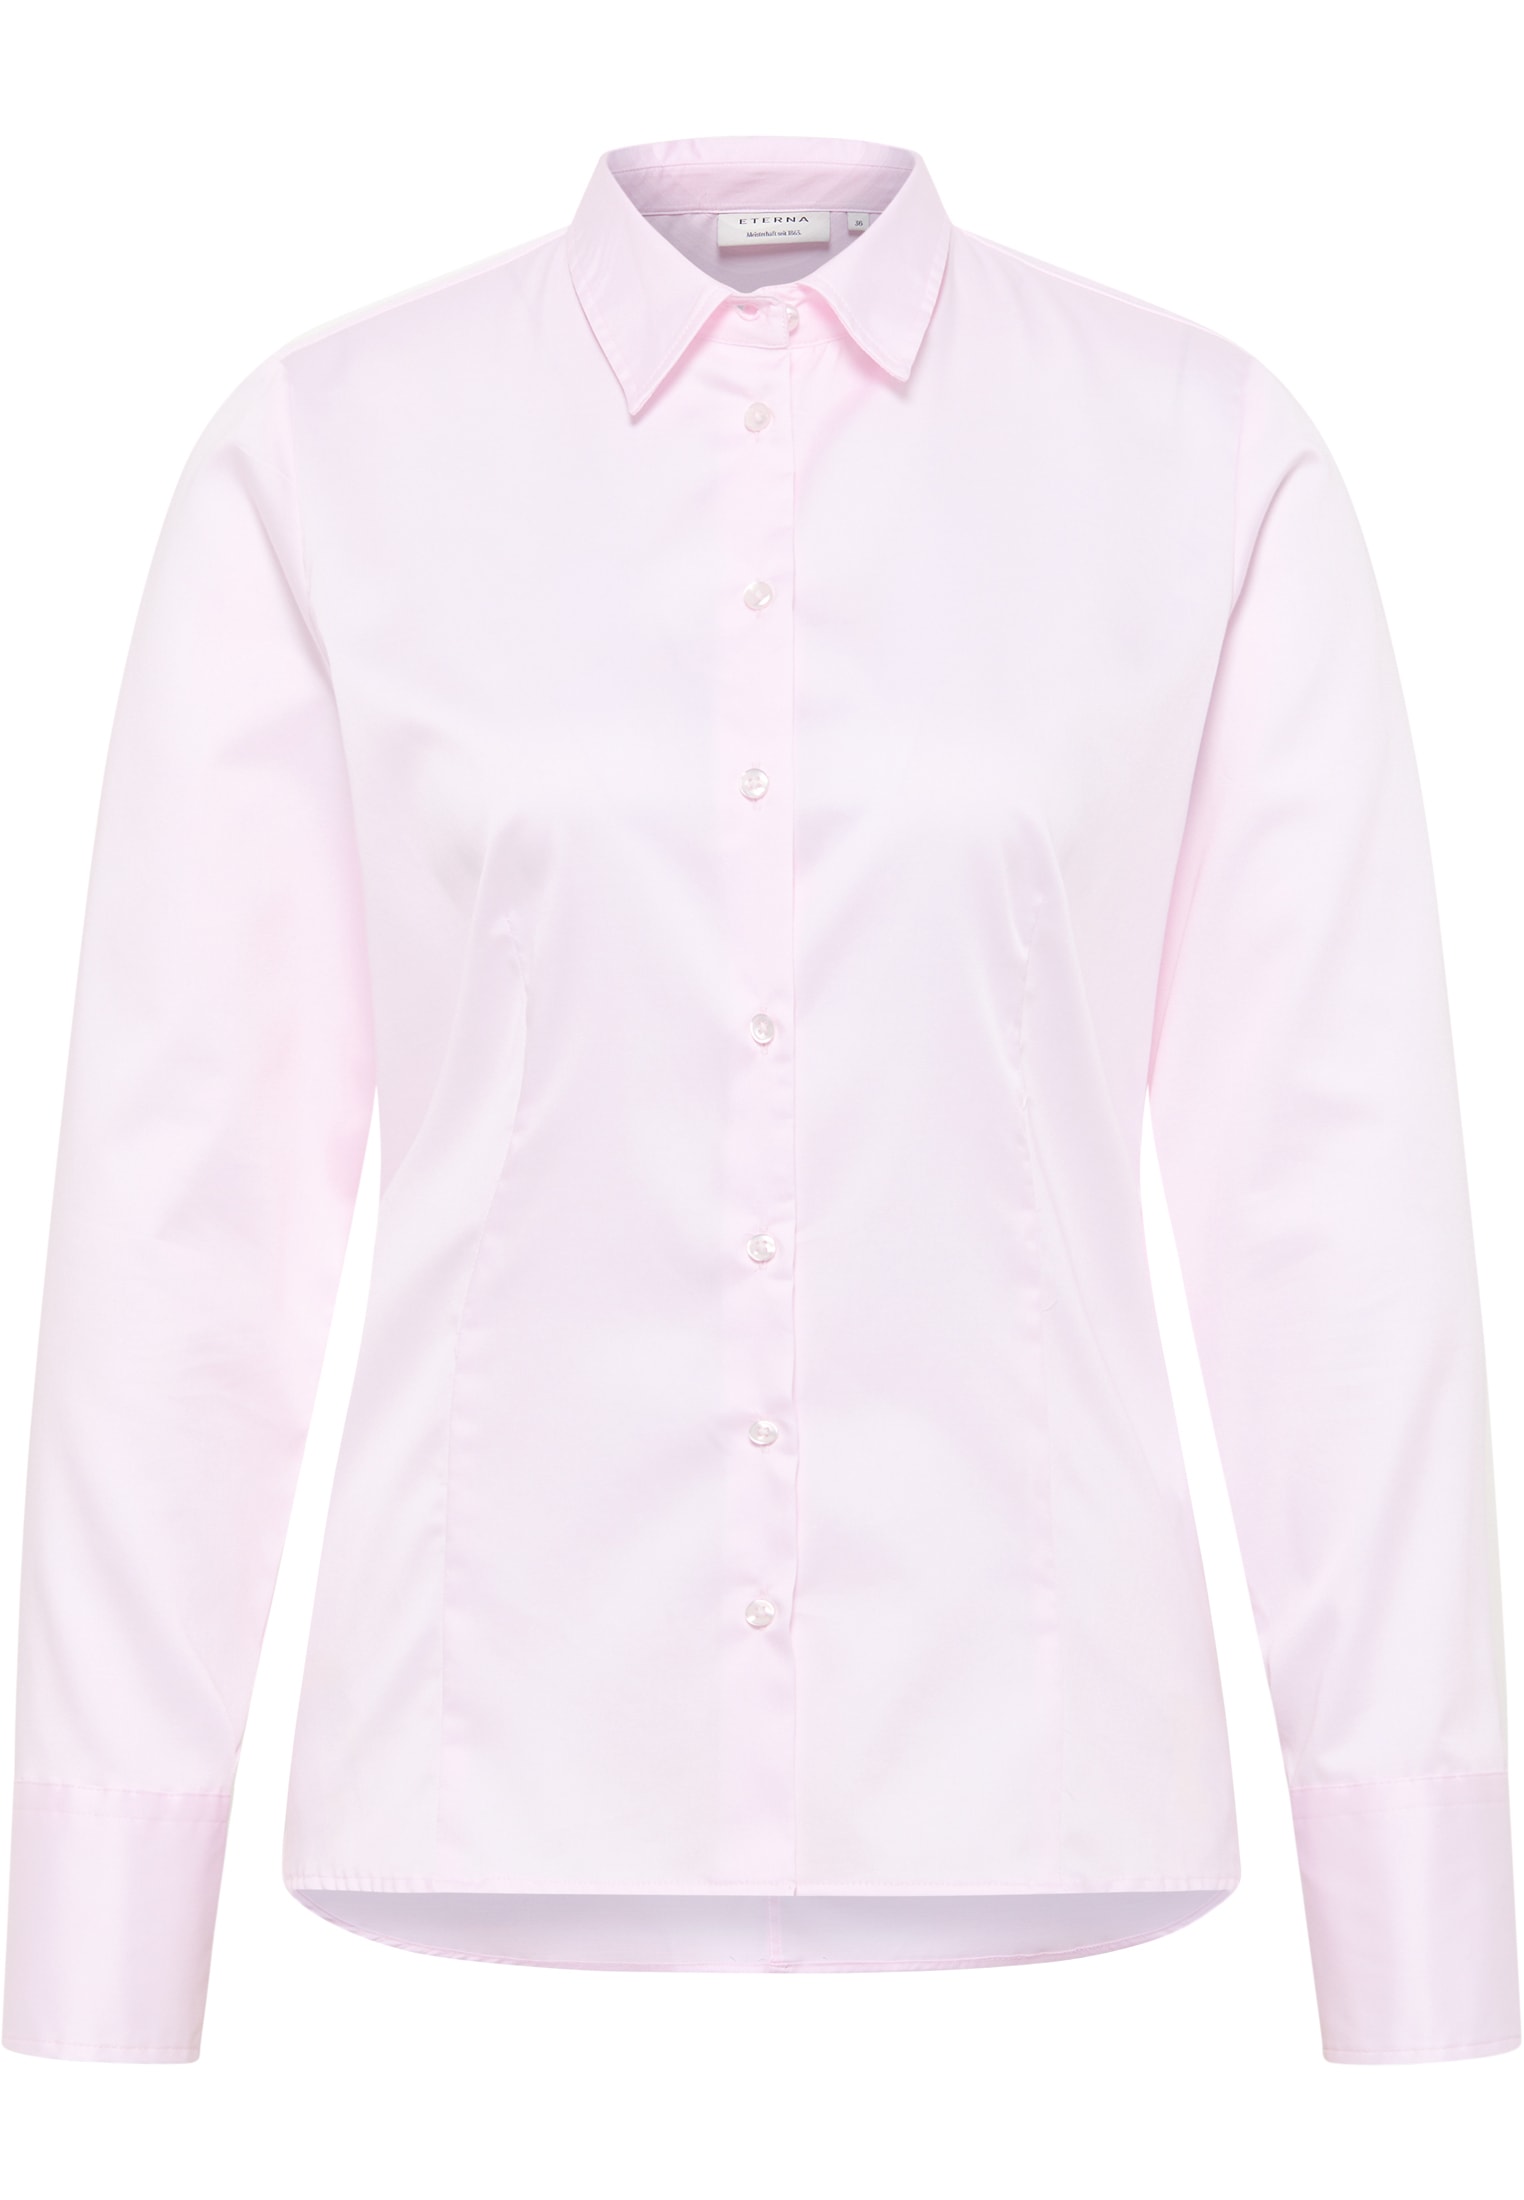 Satin Shirt Blouse in rose plain